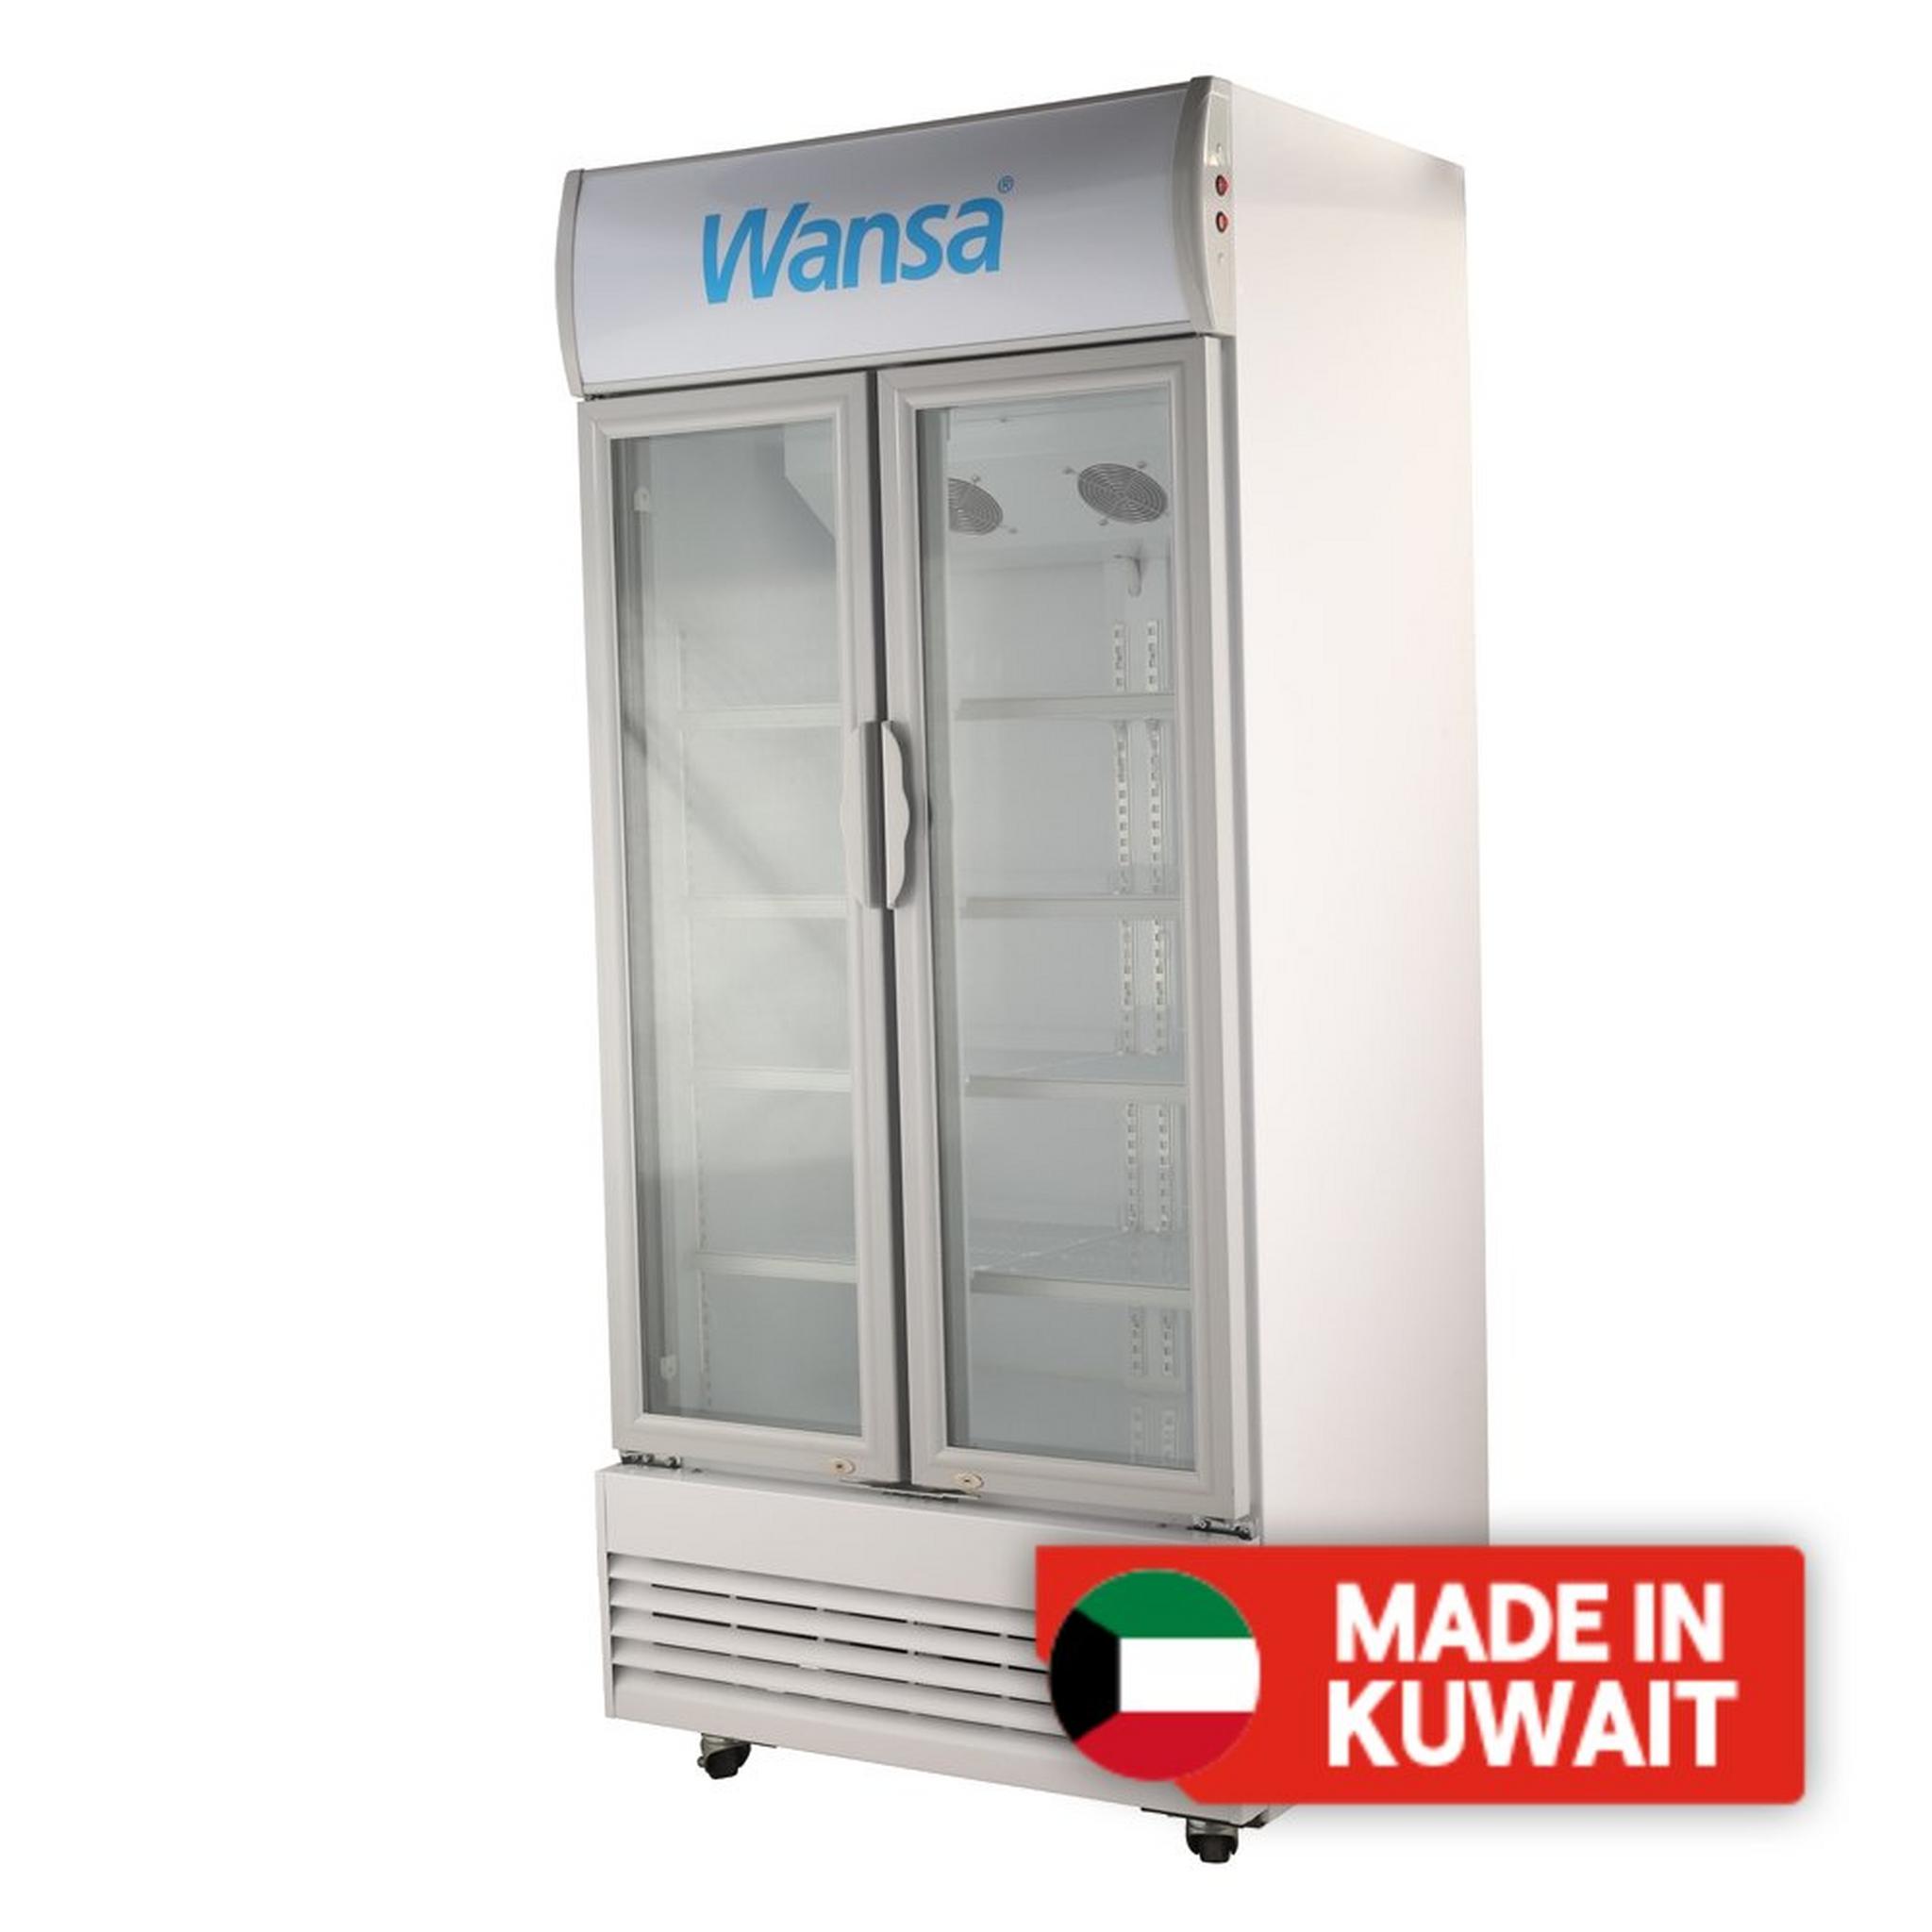 Wansa 21 Cft. Window Refrigerator (WUSC-600-NFWT) – White